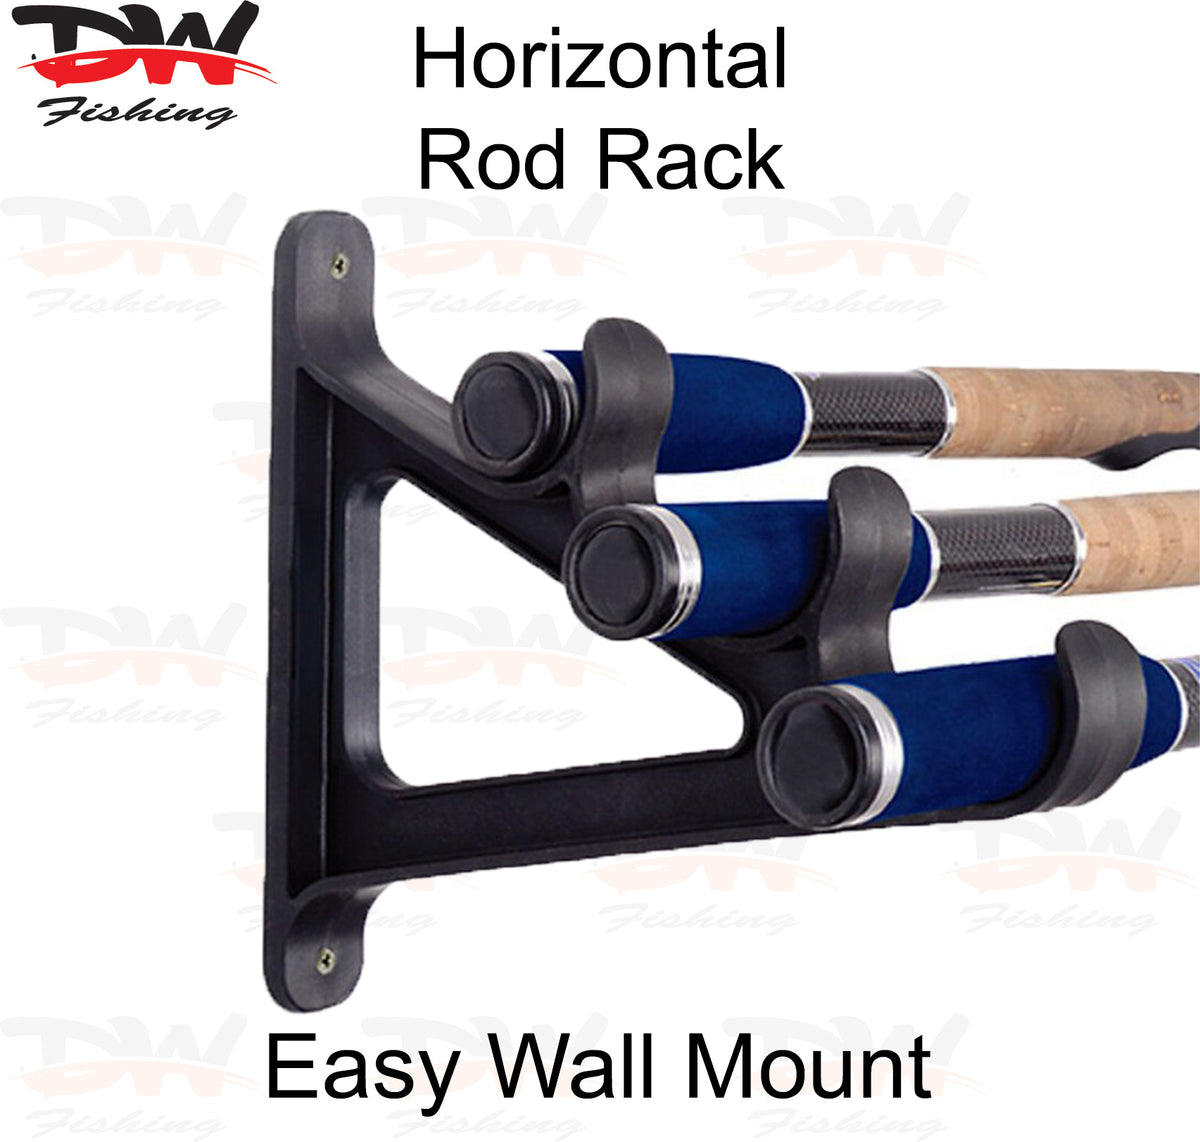 Horizontal Wall Mount Rod holder, Fishing Tackle